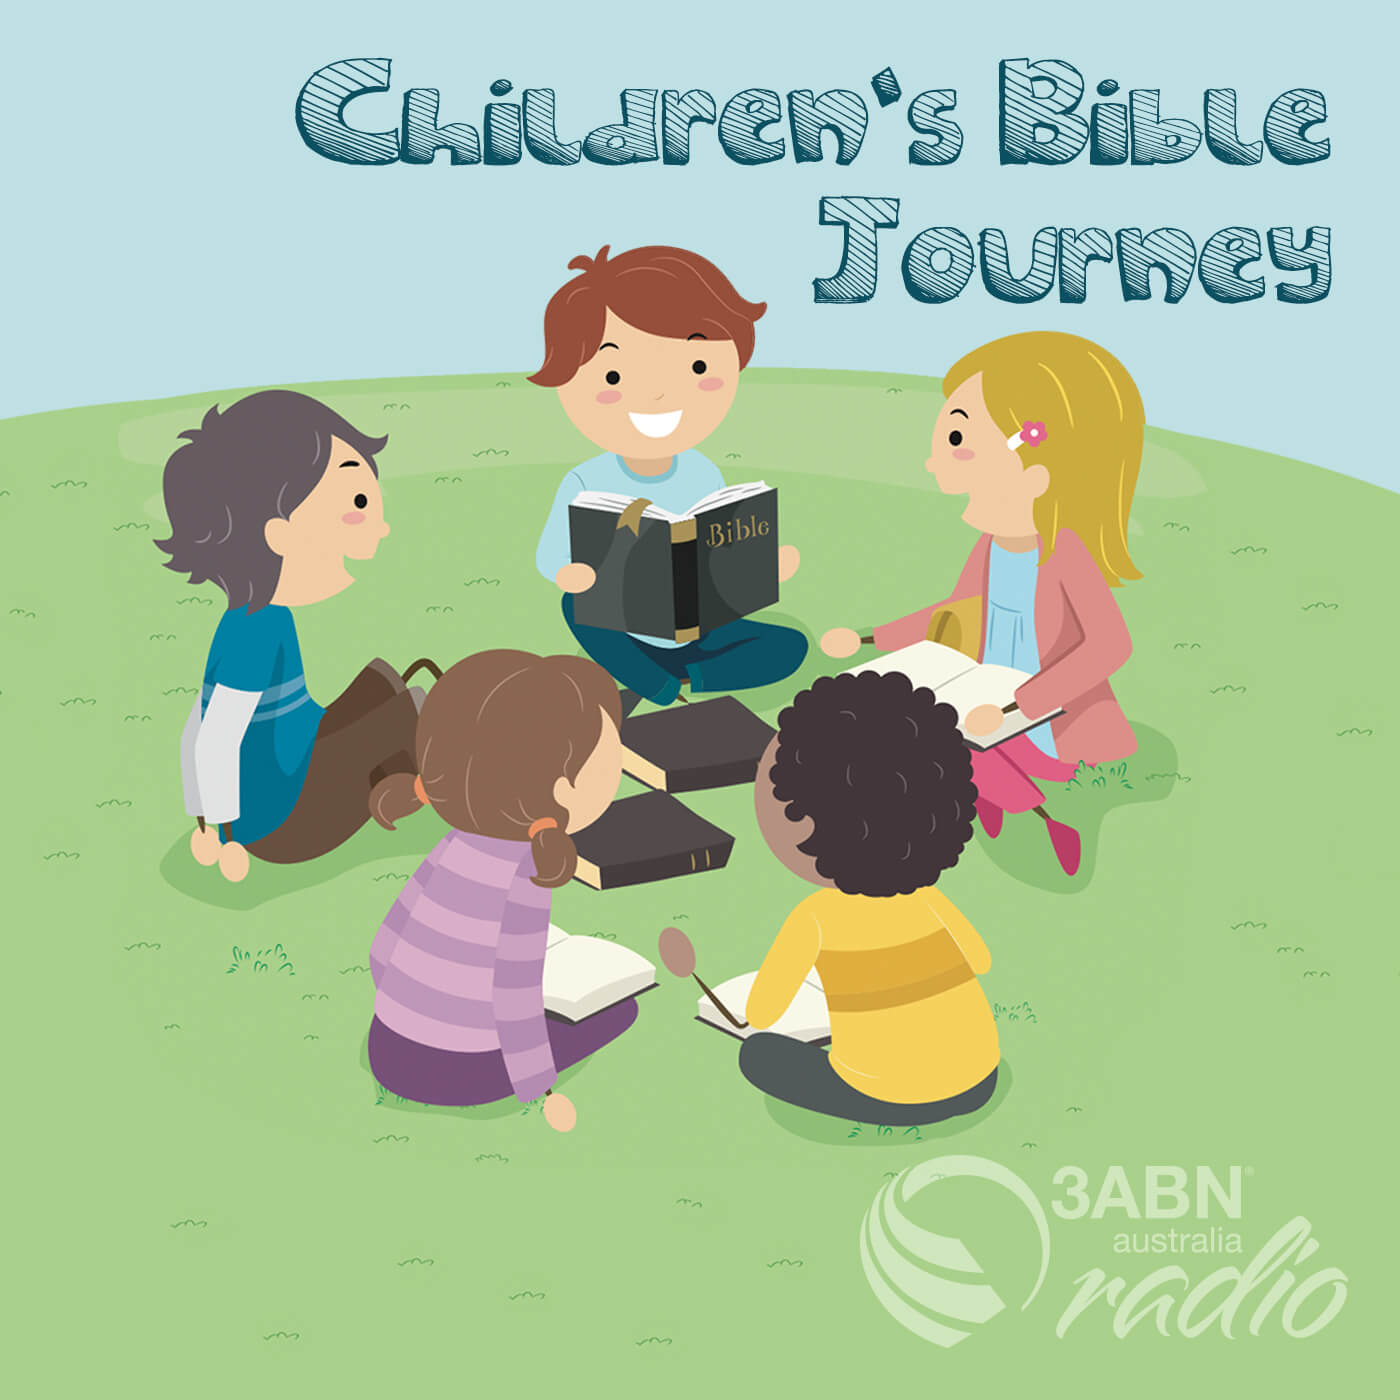 Children’s Bible Journey - 2217